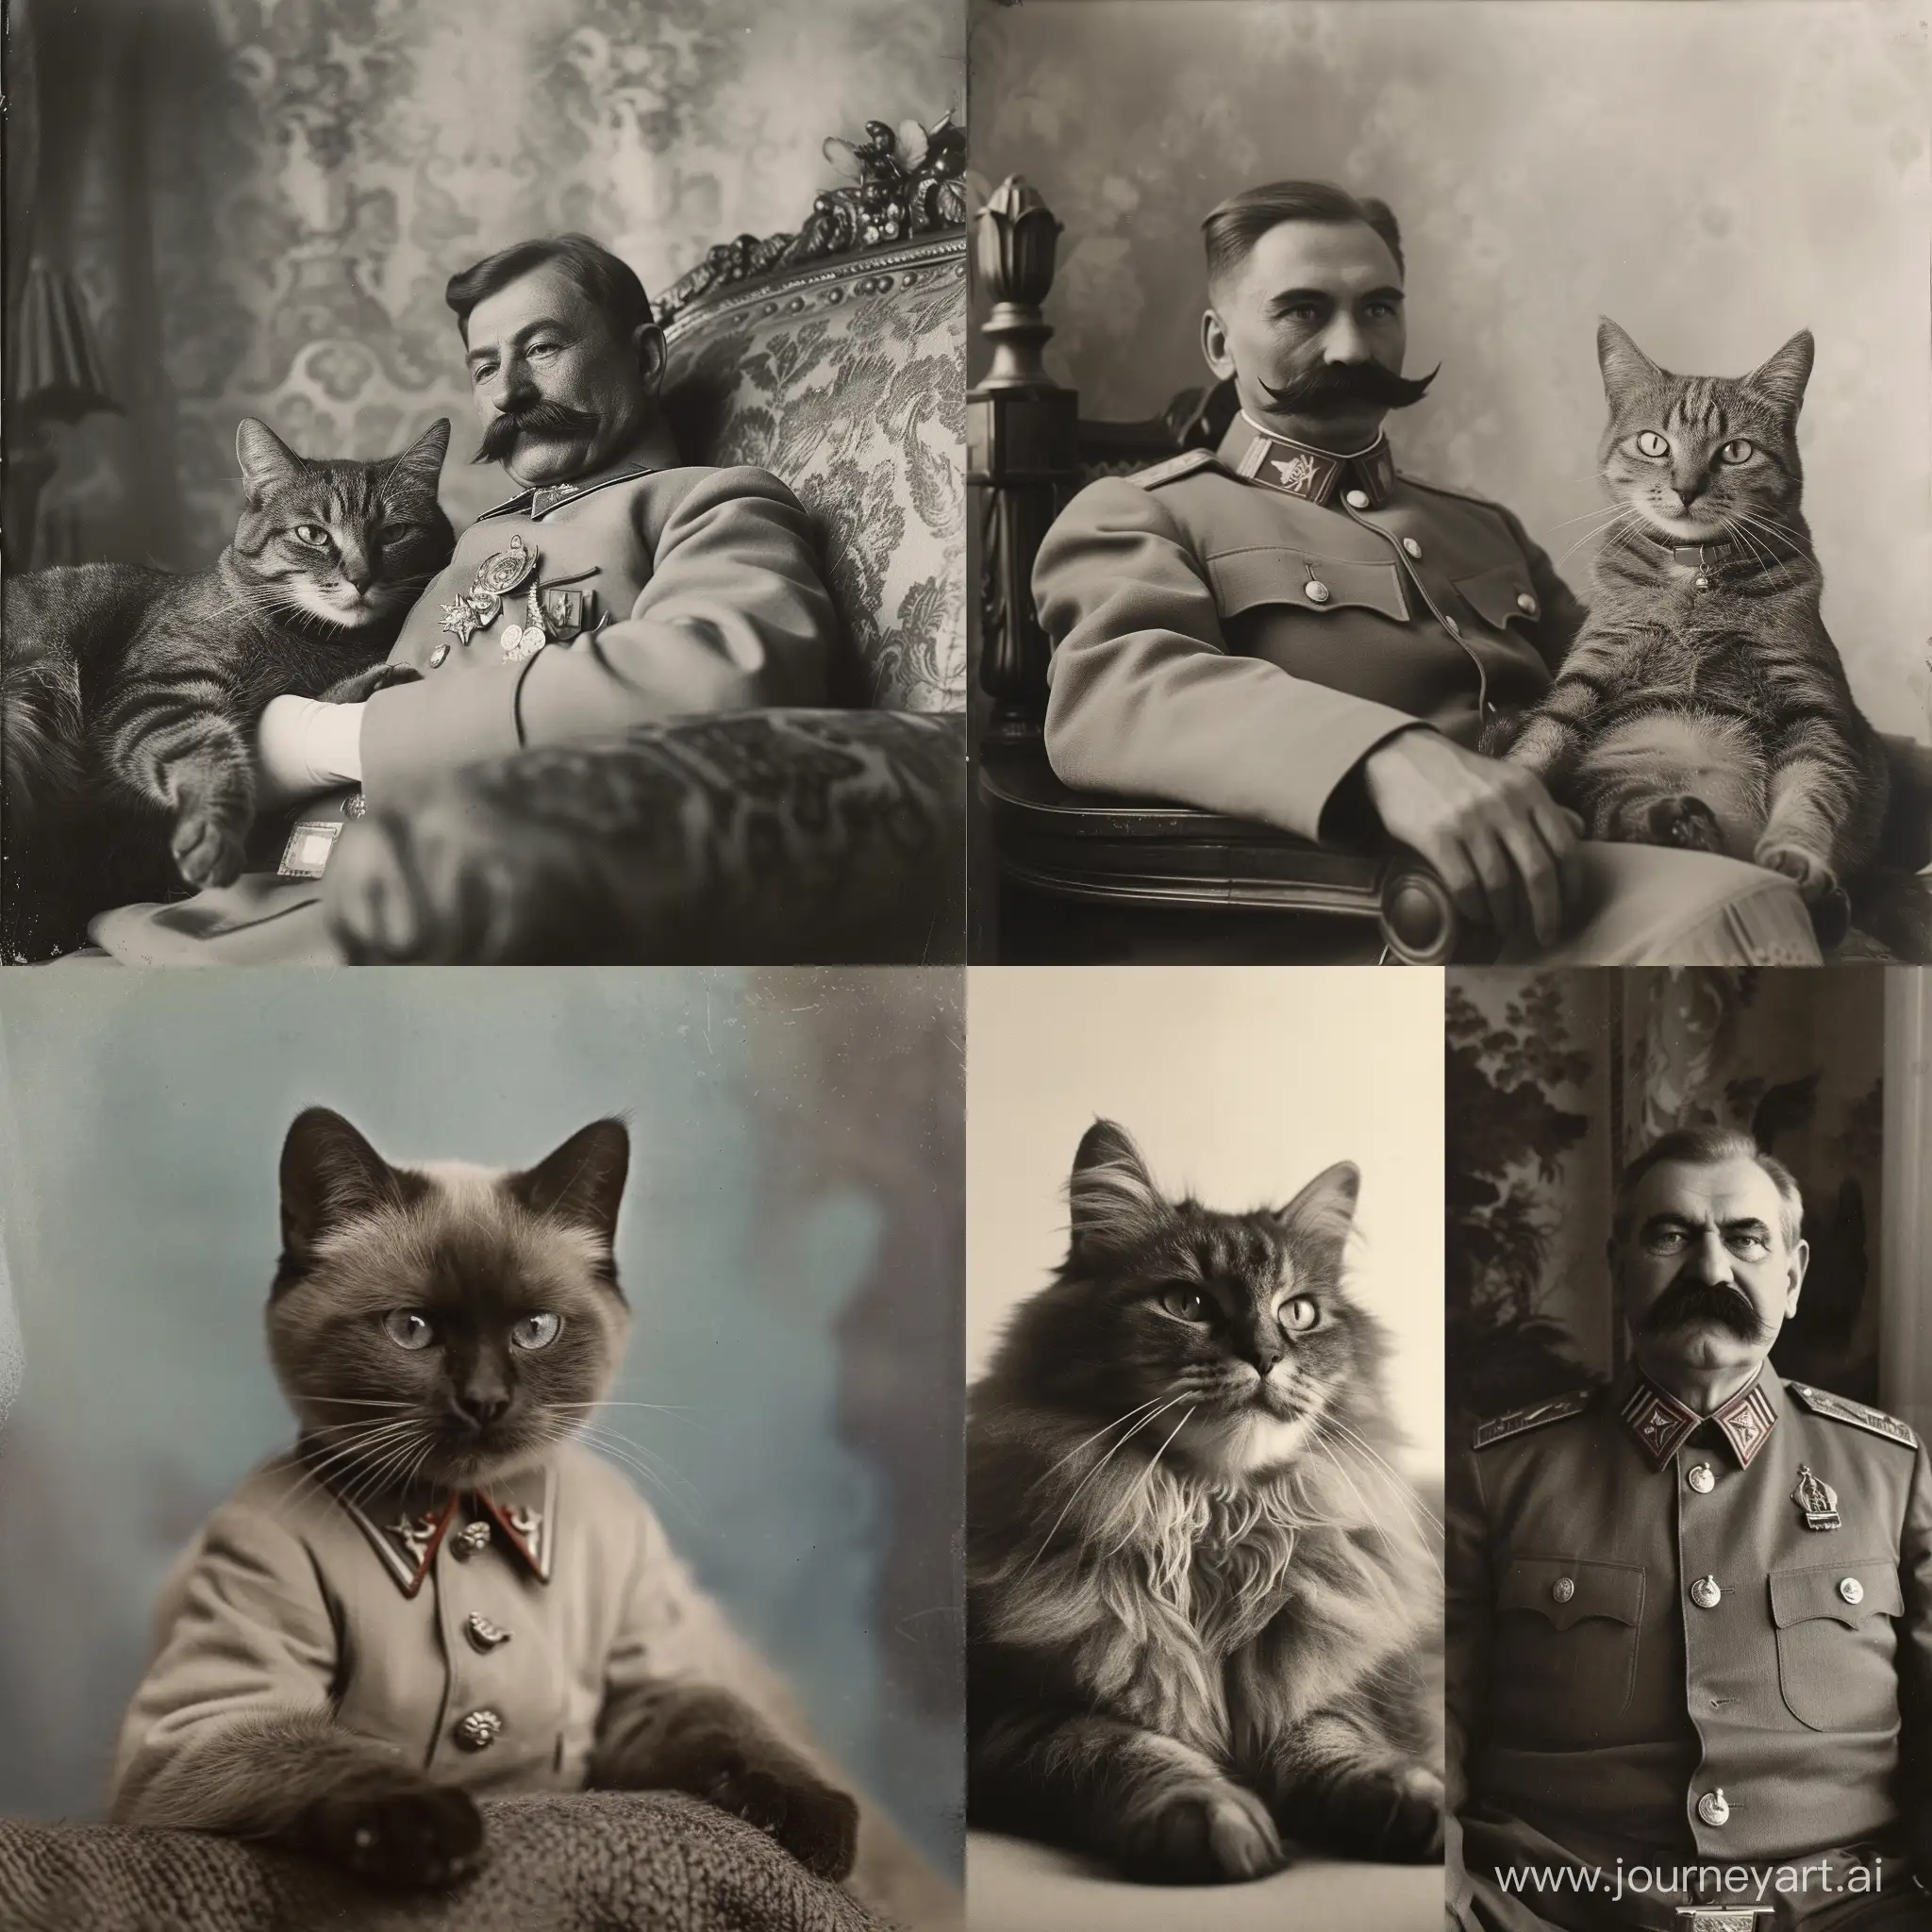 Authoritarian-Kitty-Resembling-Joseph-Stalin